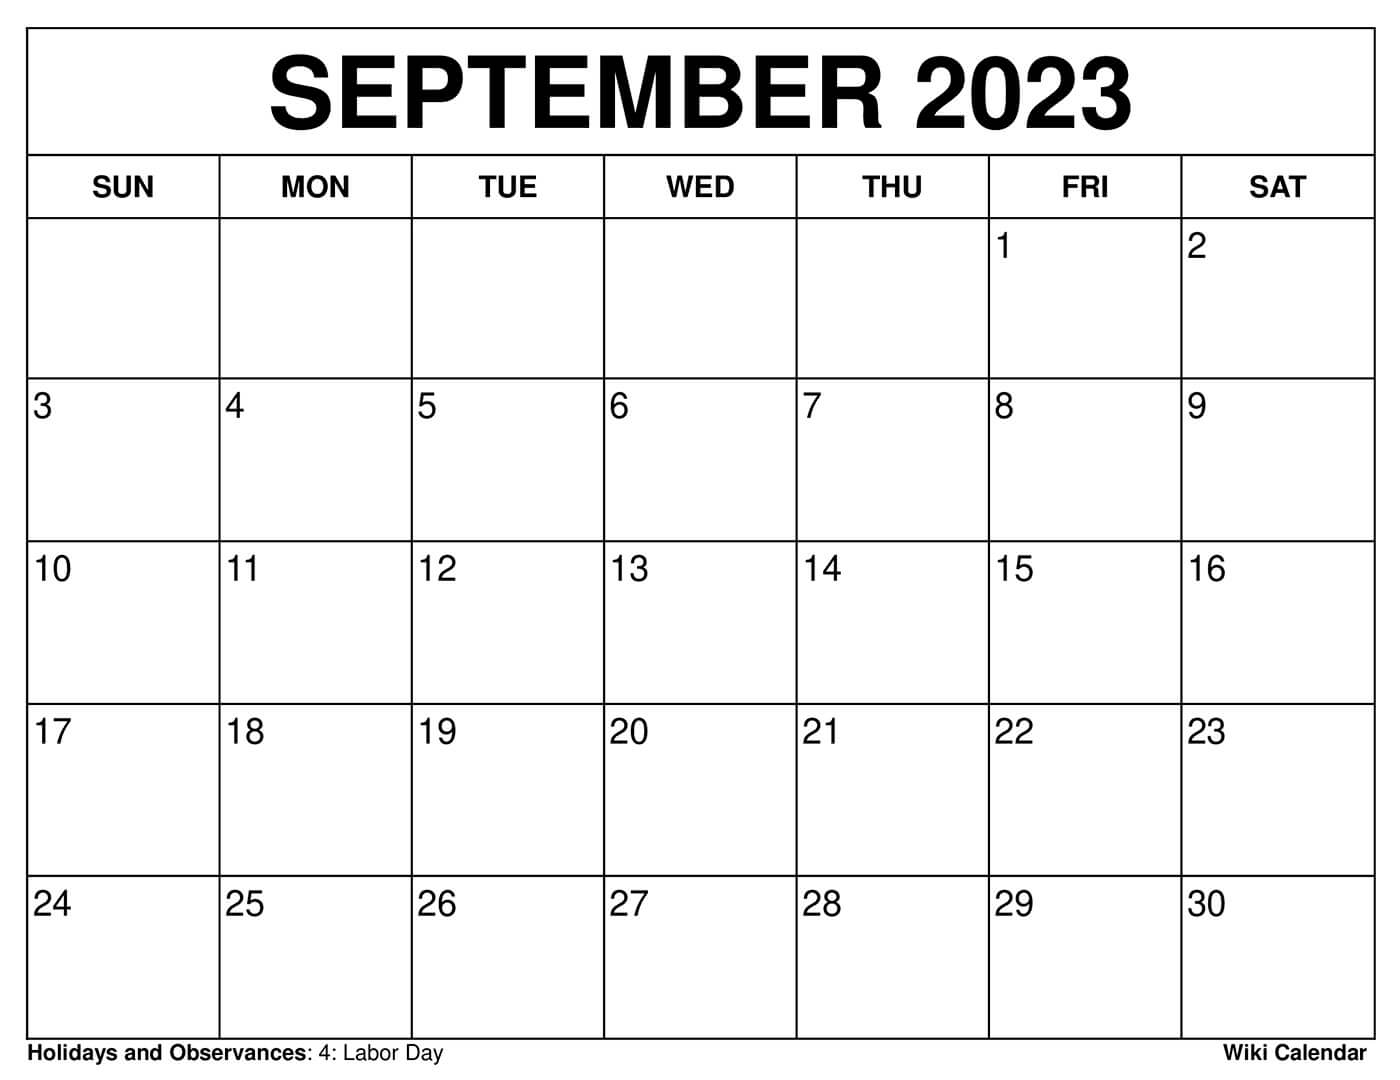 September 2022 Calendar Holidays Free Printable September 2022 Calendars - Wiki Calendar